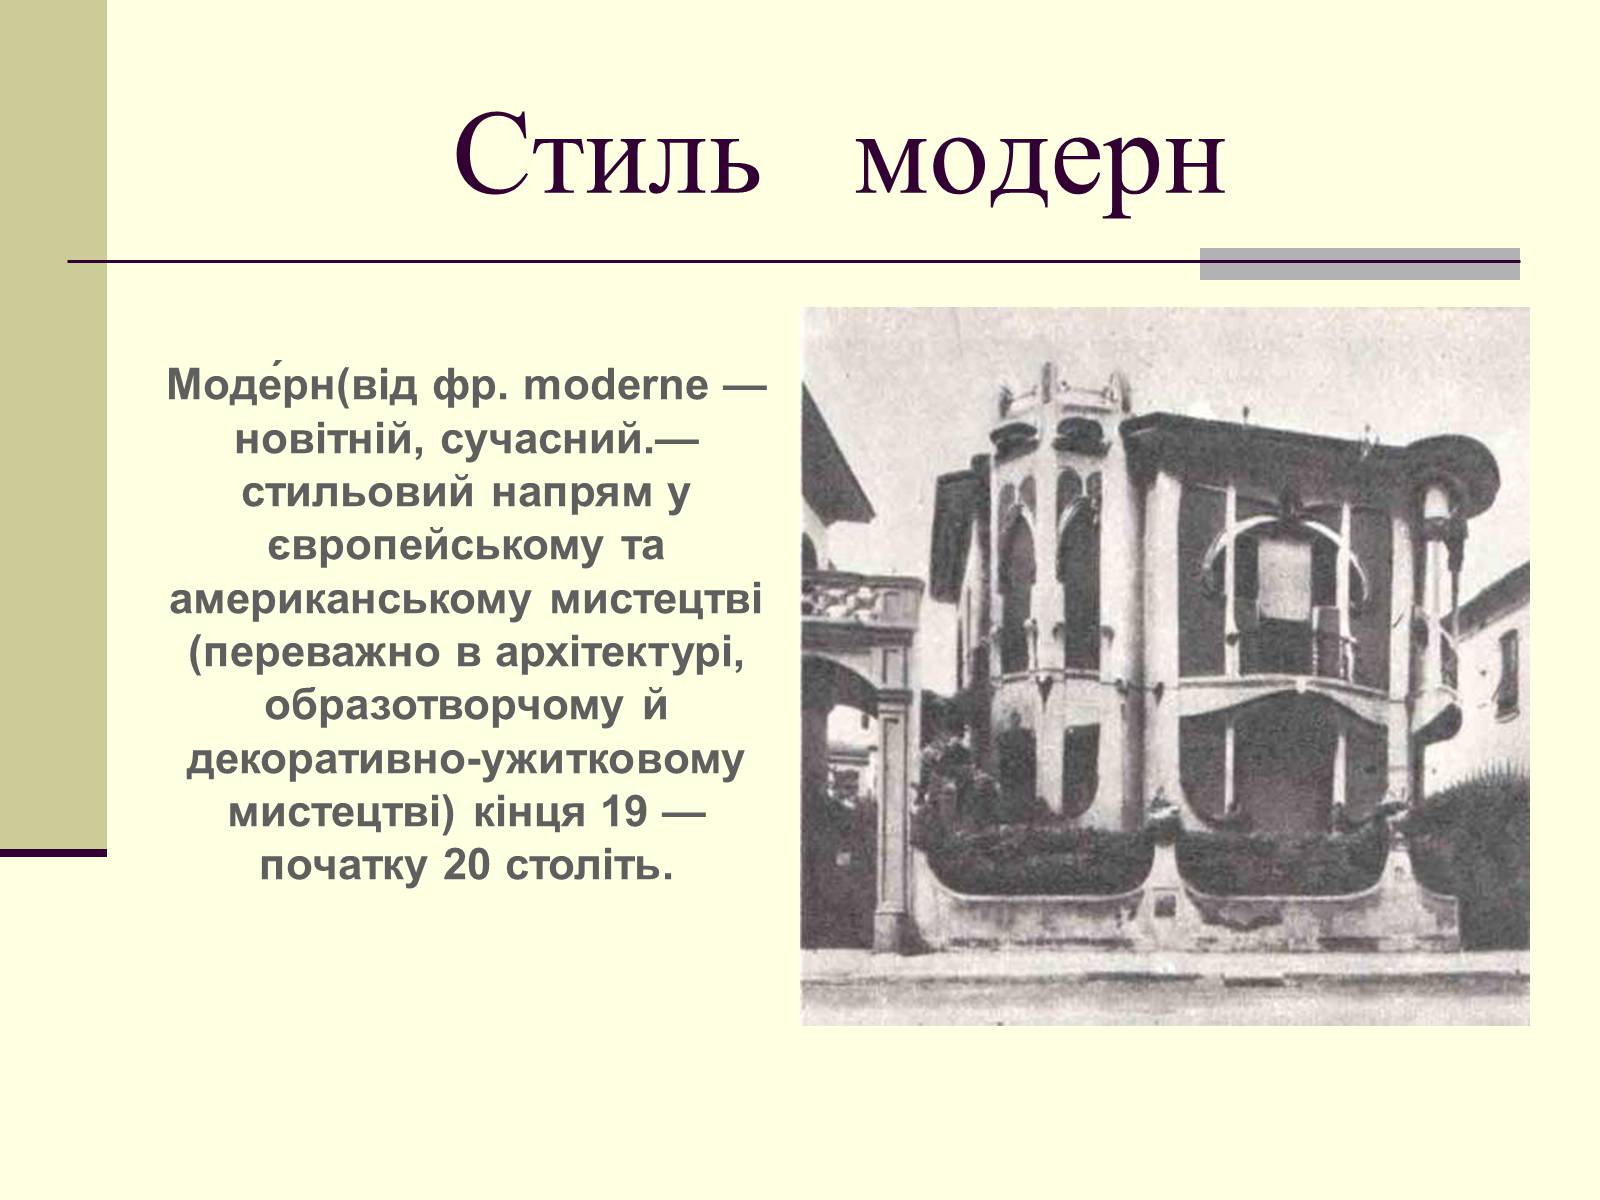 Европейский Модерн в архитектуре в конце 19 века начала 20